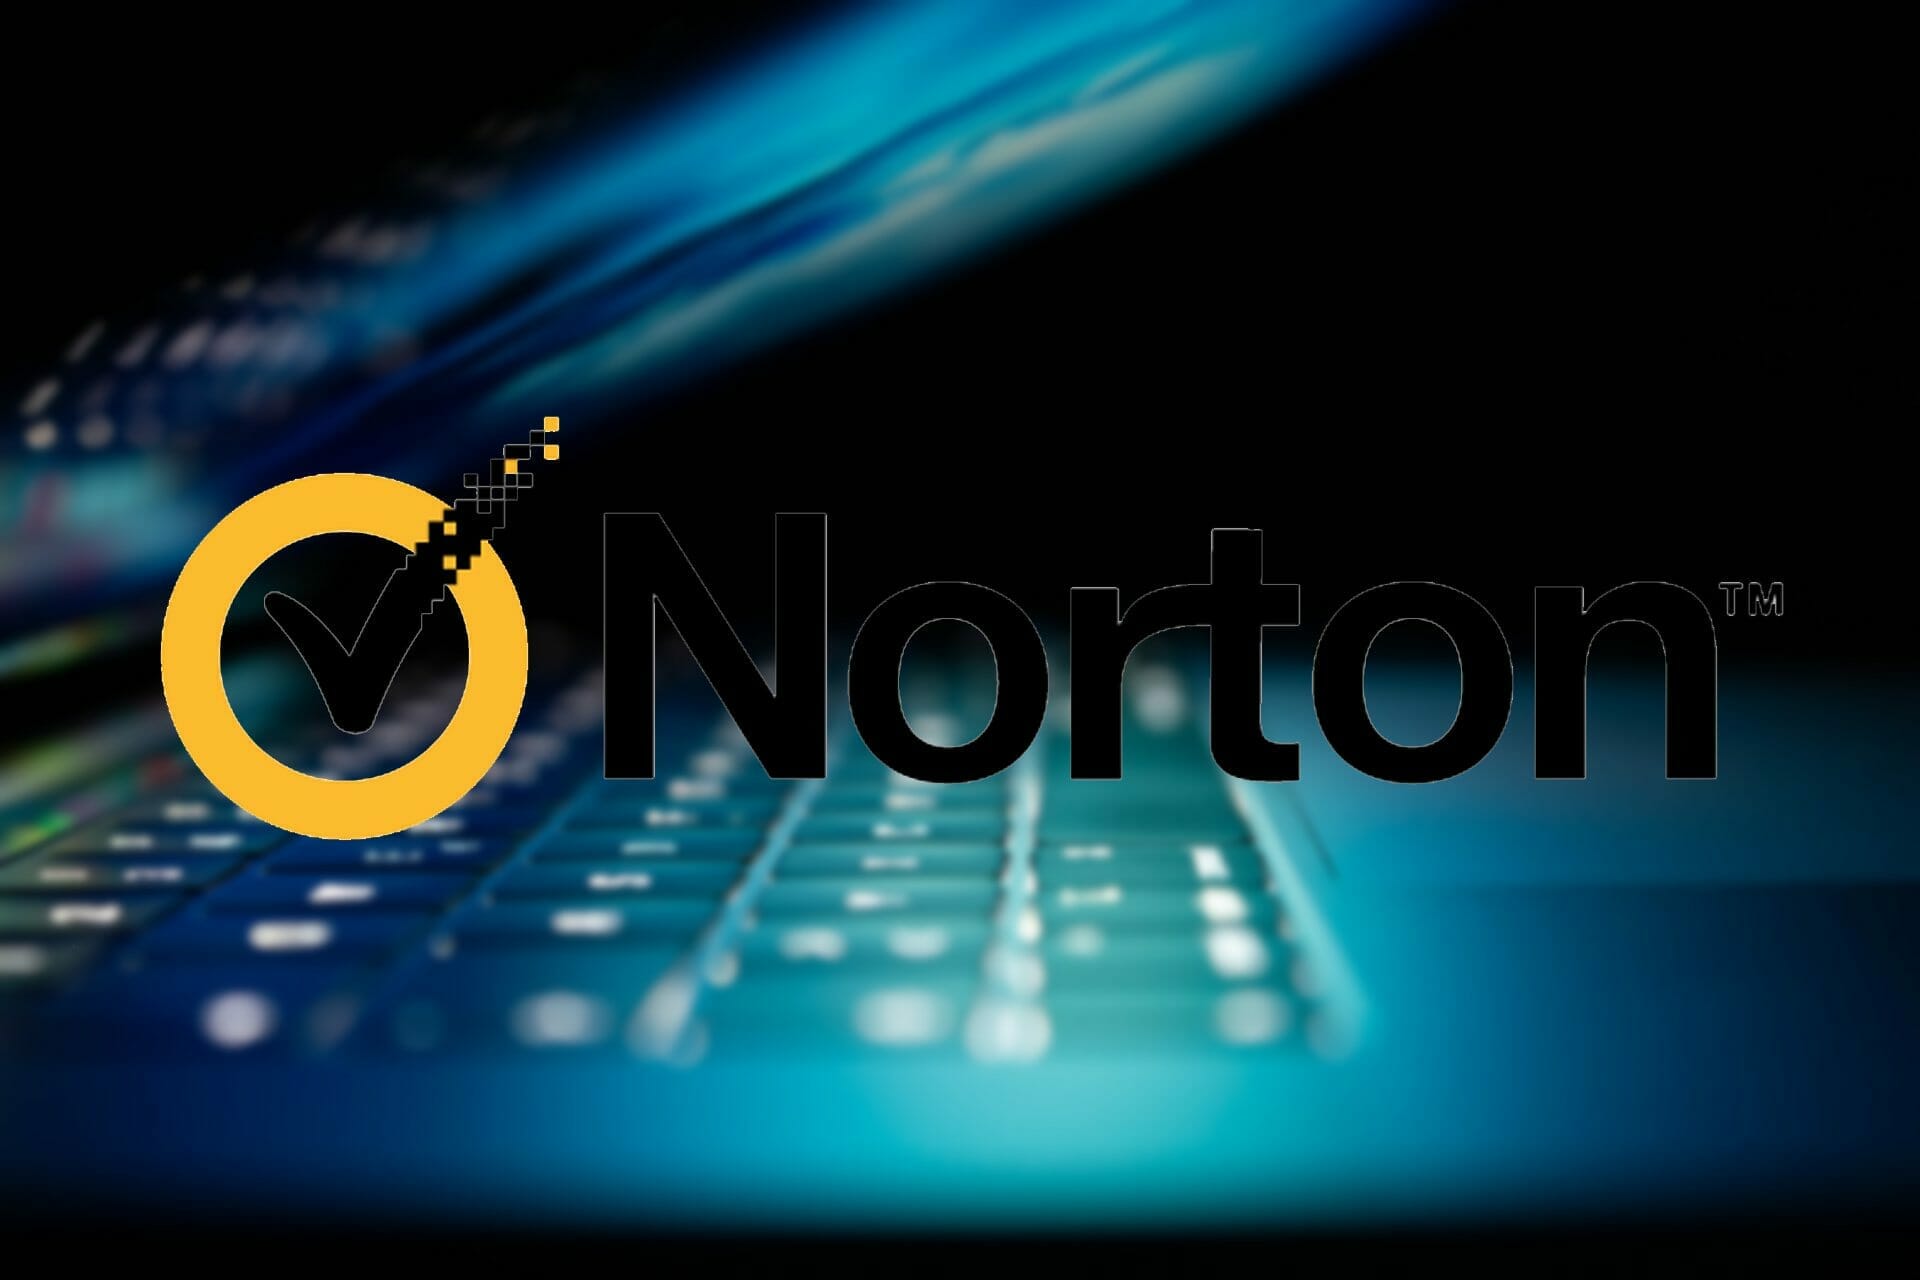 norton security won't open